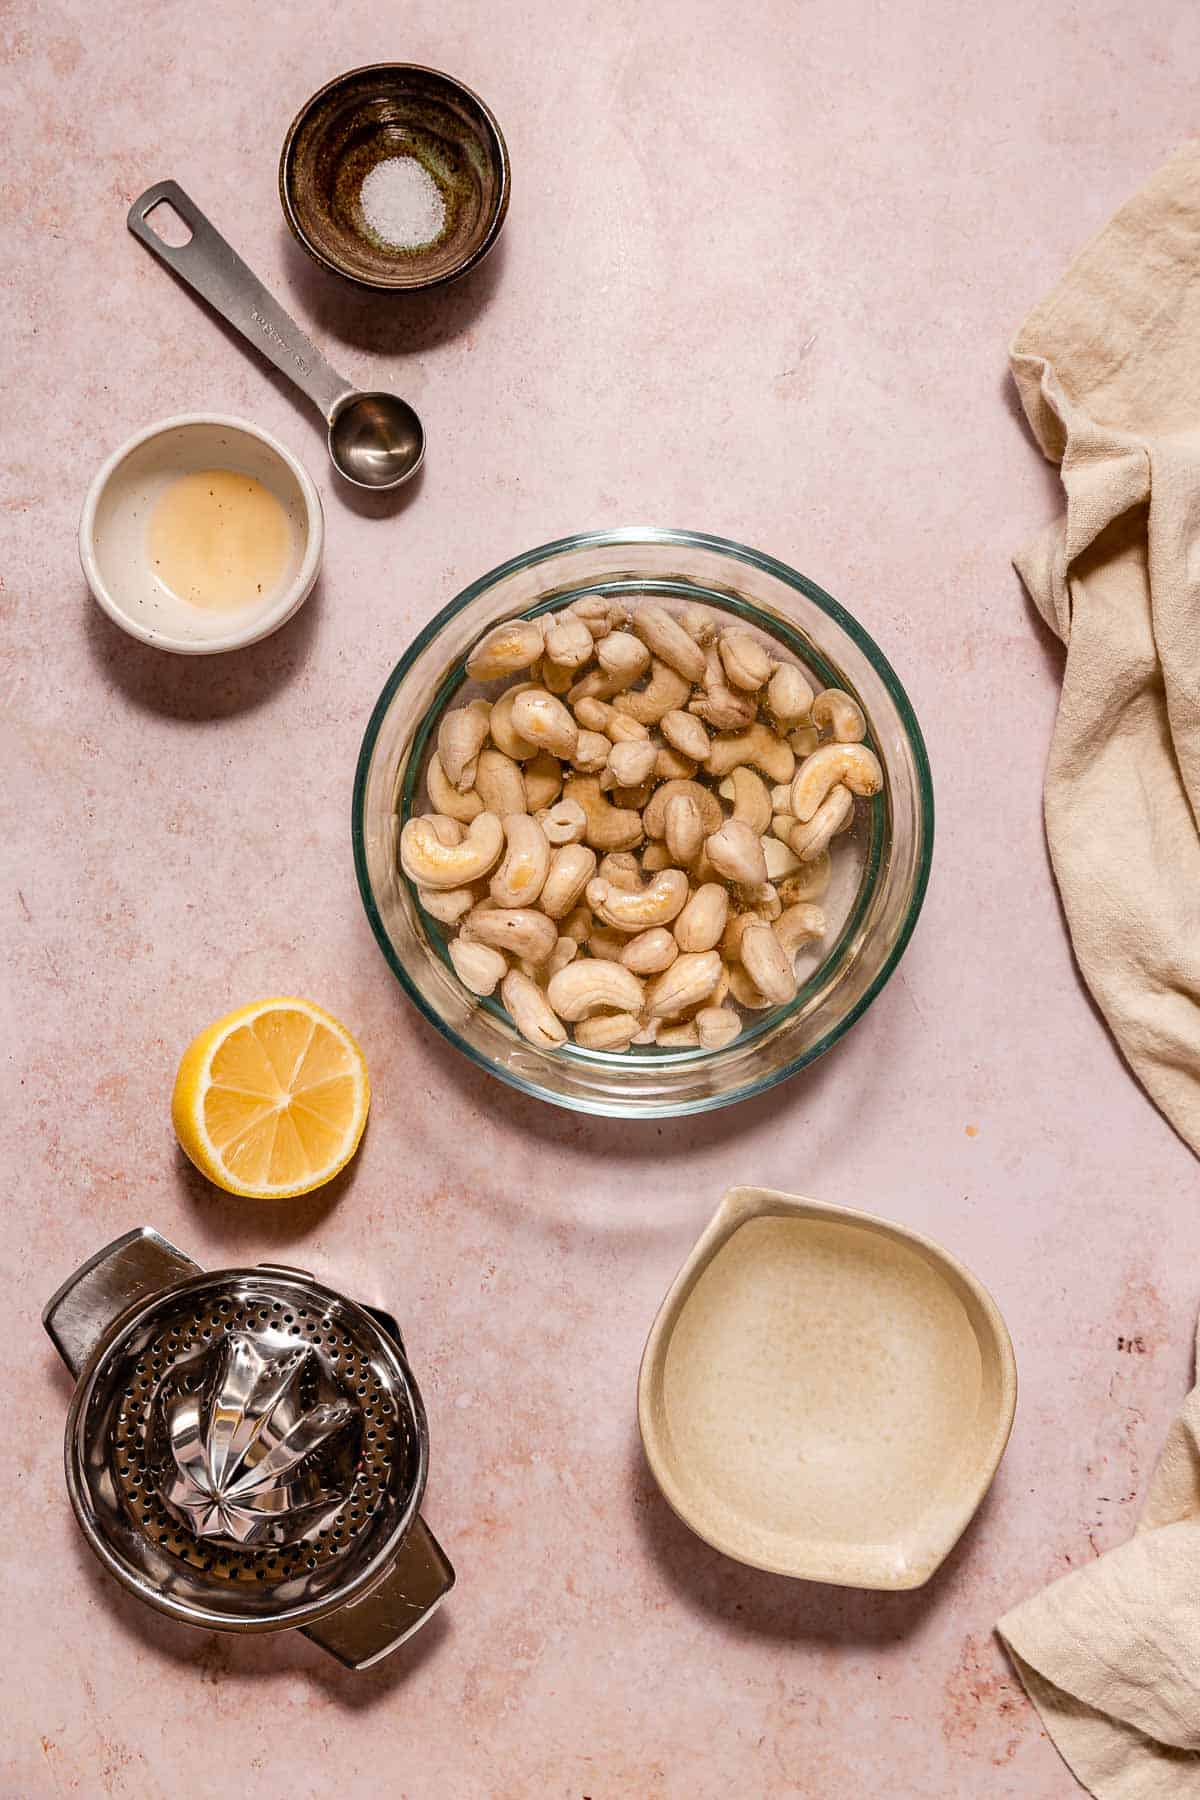 Ingredients for making vegan sour cream, including cashews.